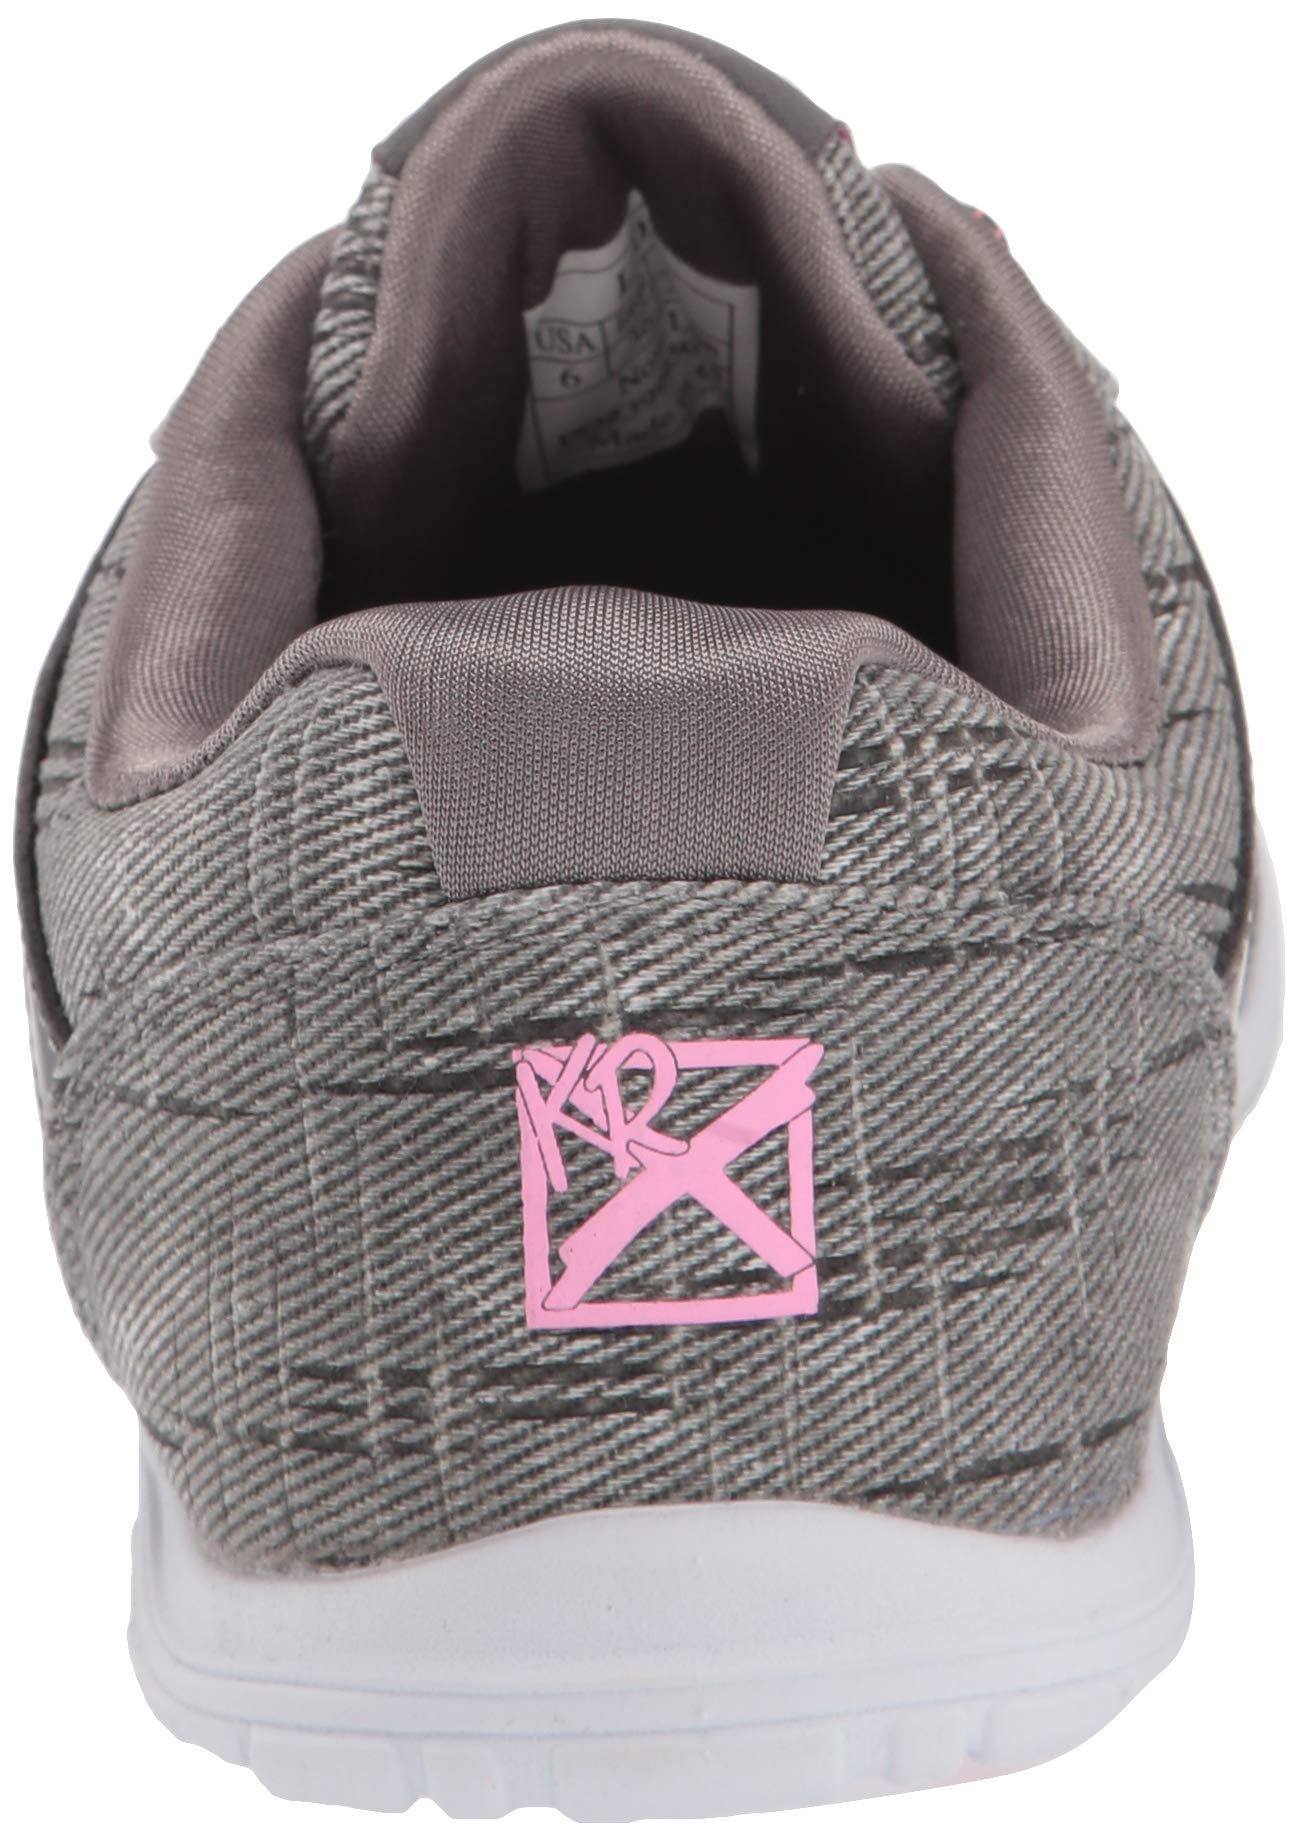 KR Strikeforce Nova Lite Athletic Women's Bowling Shoes with Komfort-Fit Construction